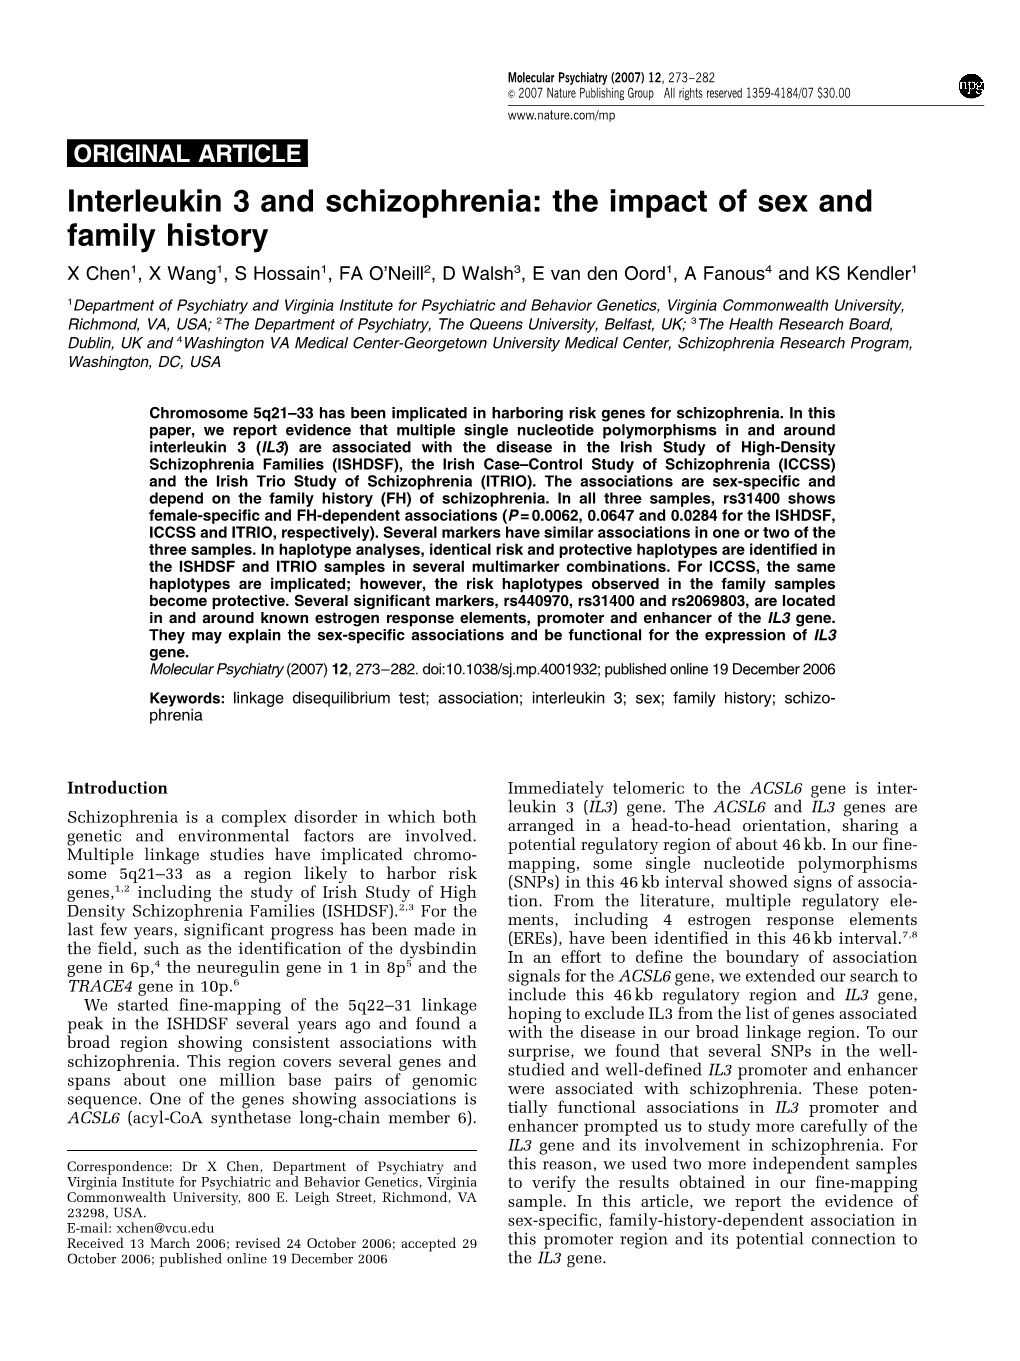 Interleukin 3 and Schizophrenia